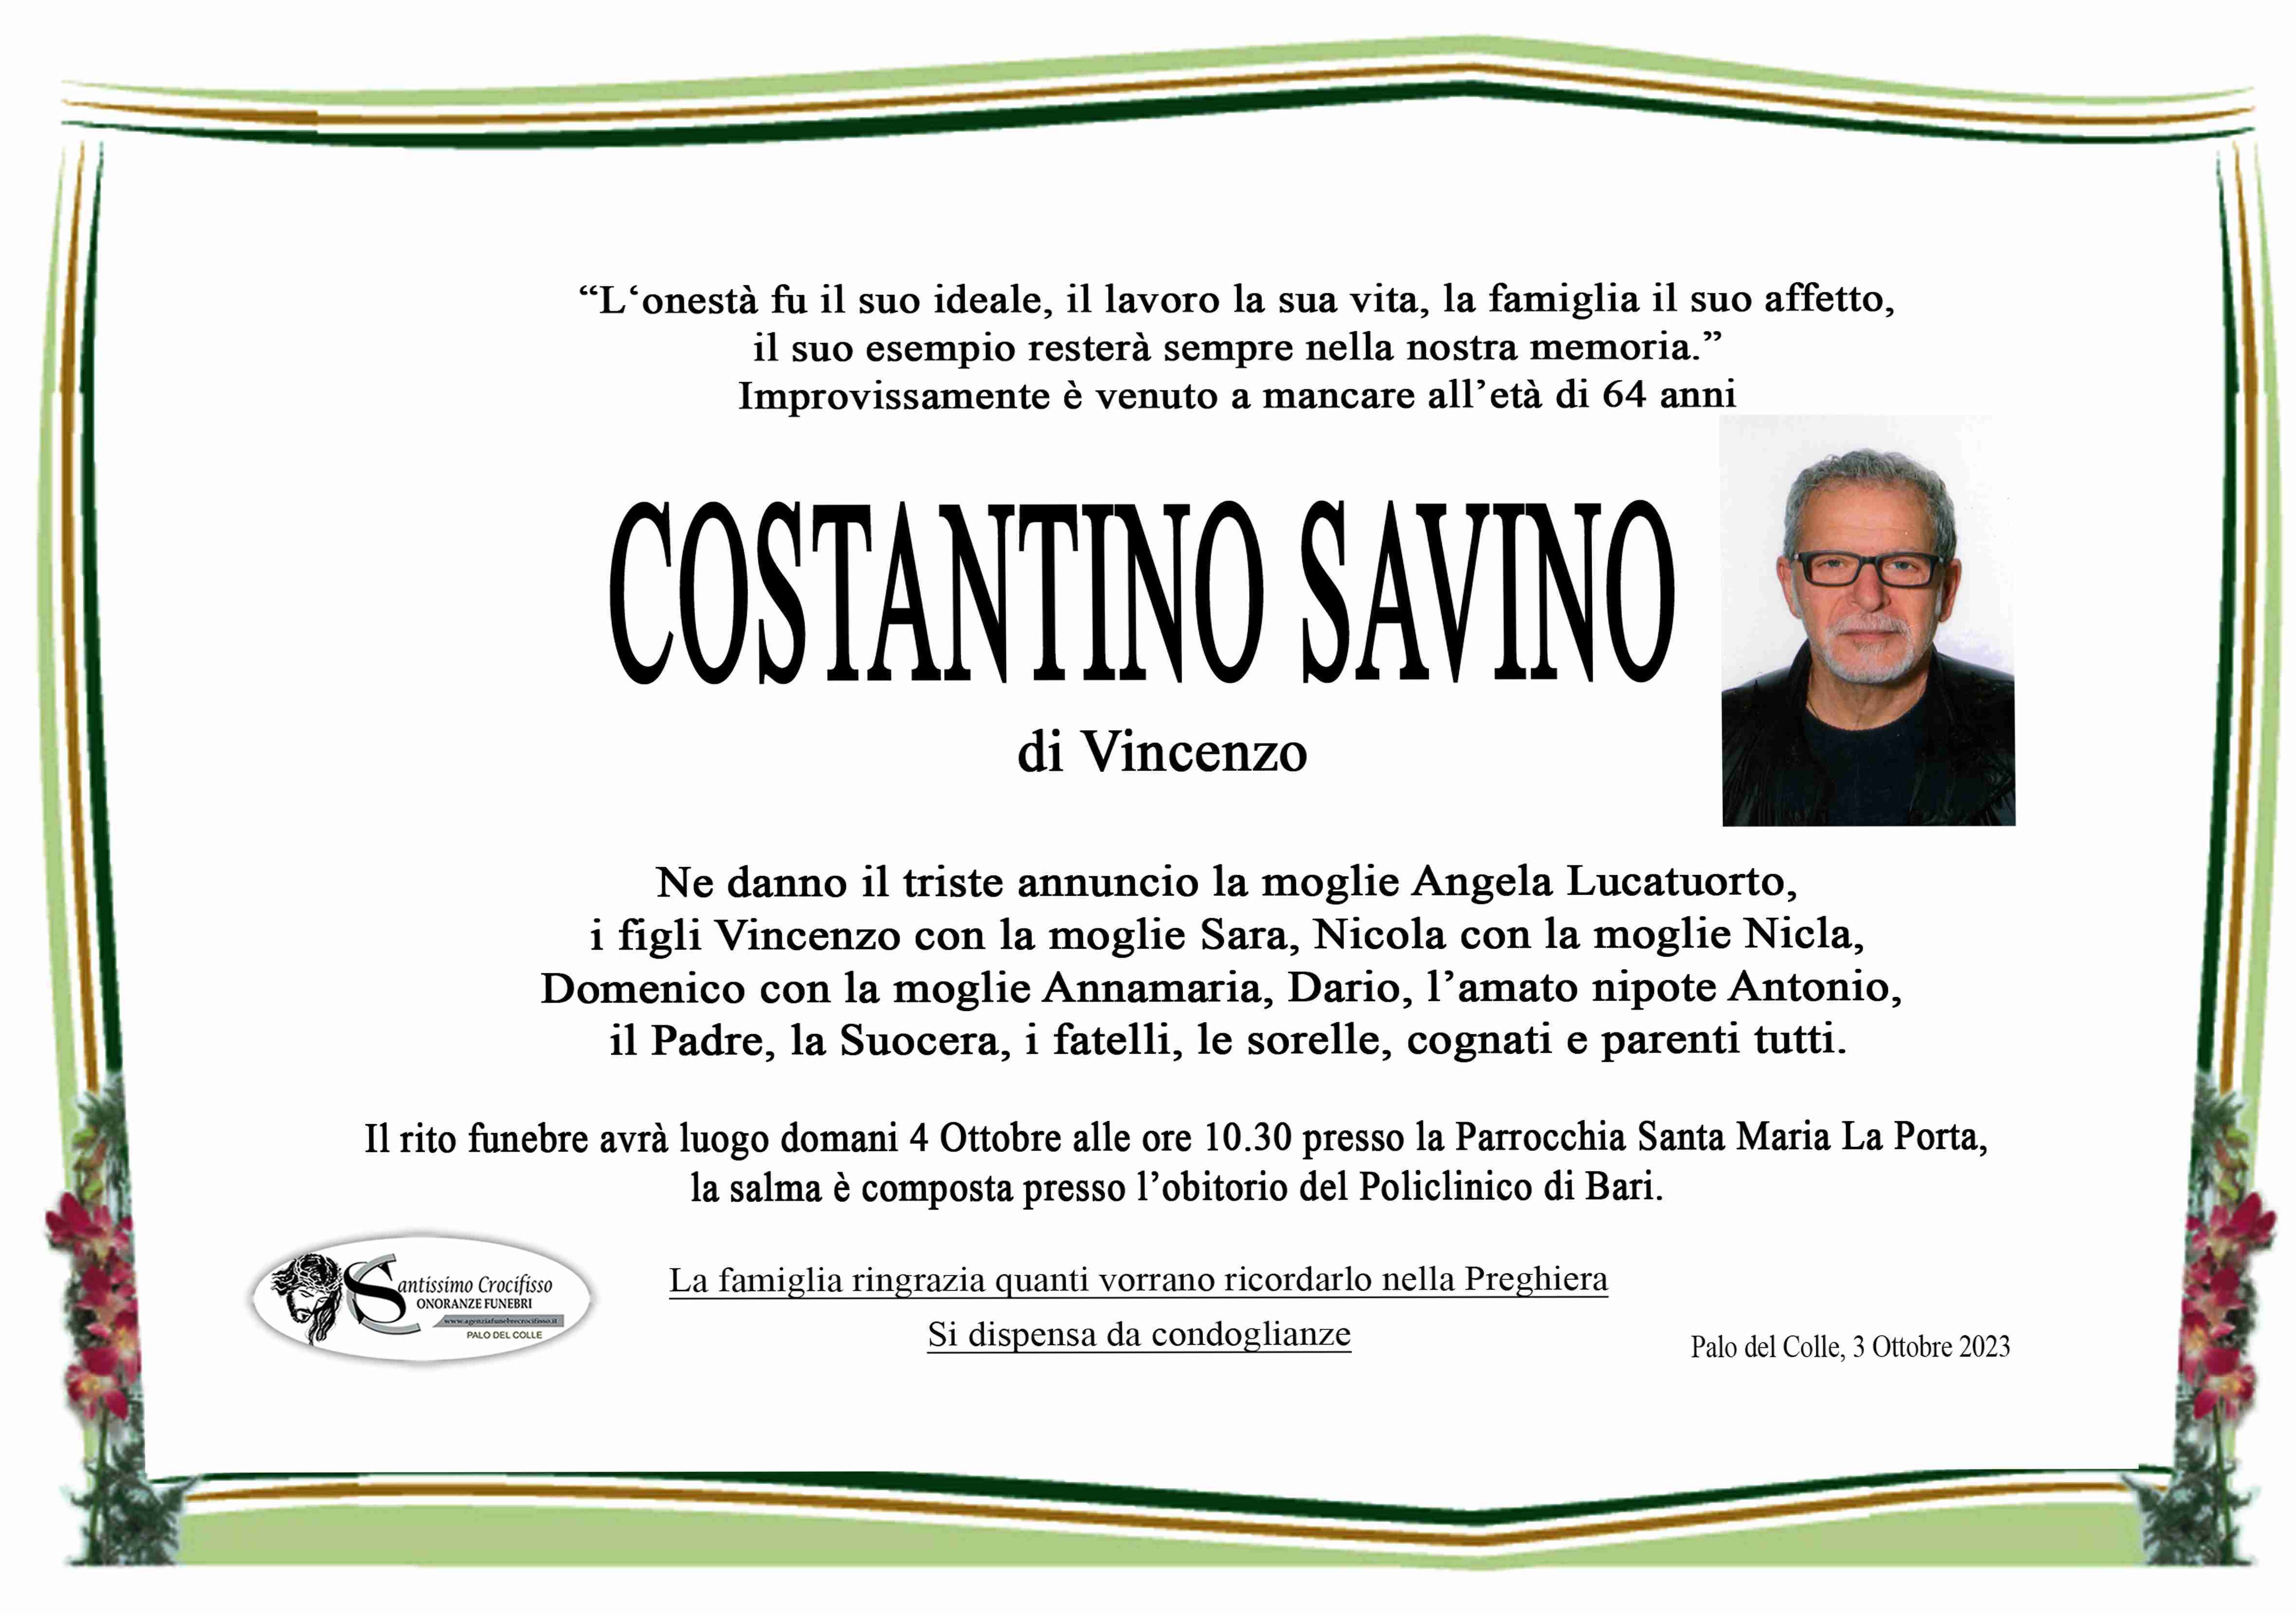 Costantino Savino